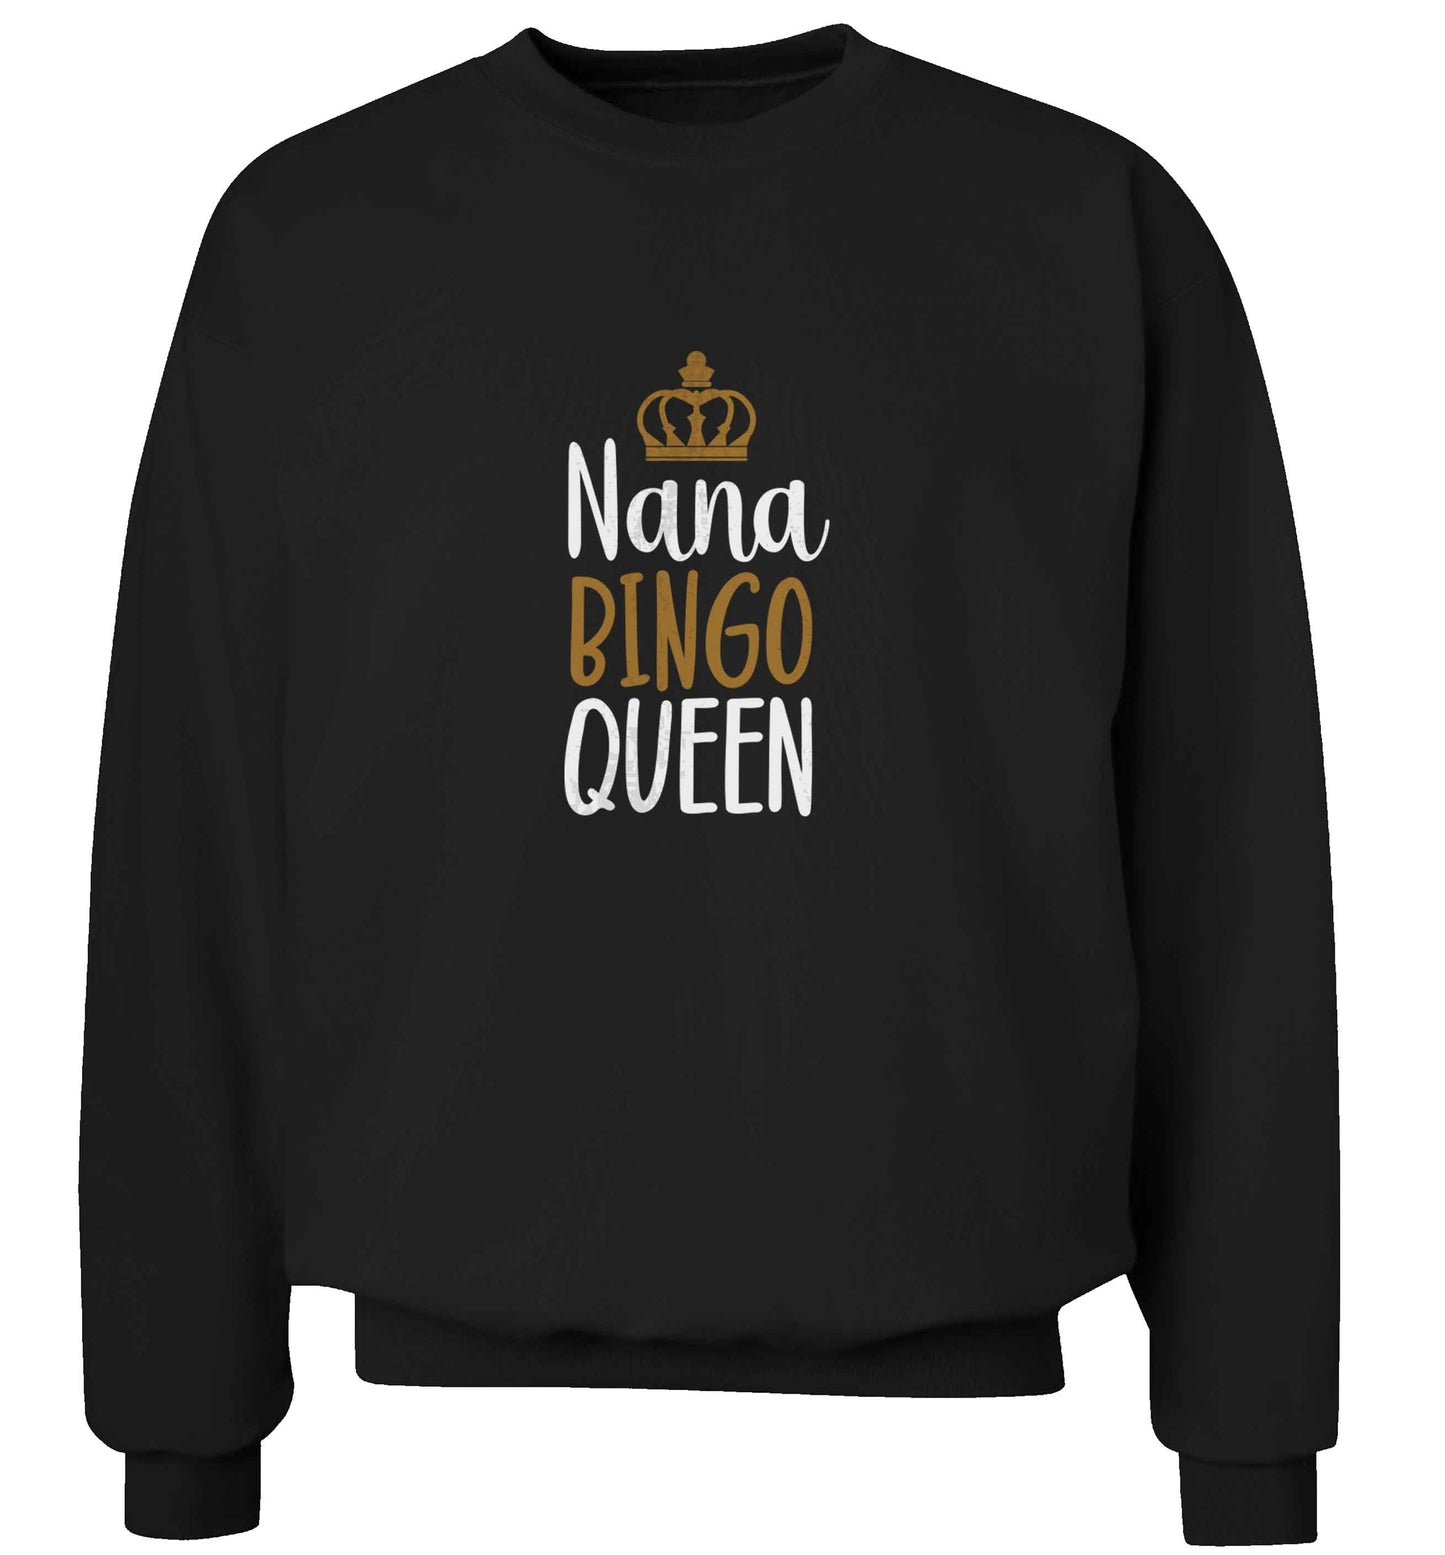 Personalised bingo queen adult's unisex black sweater 2XL